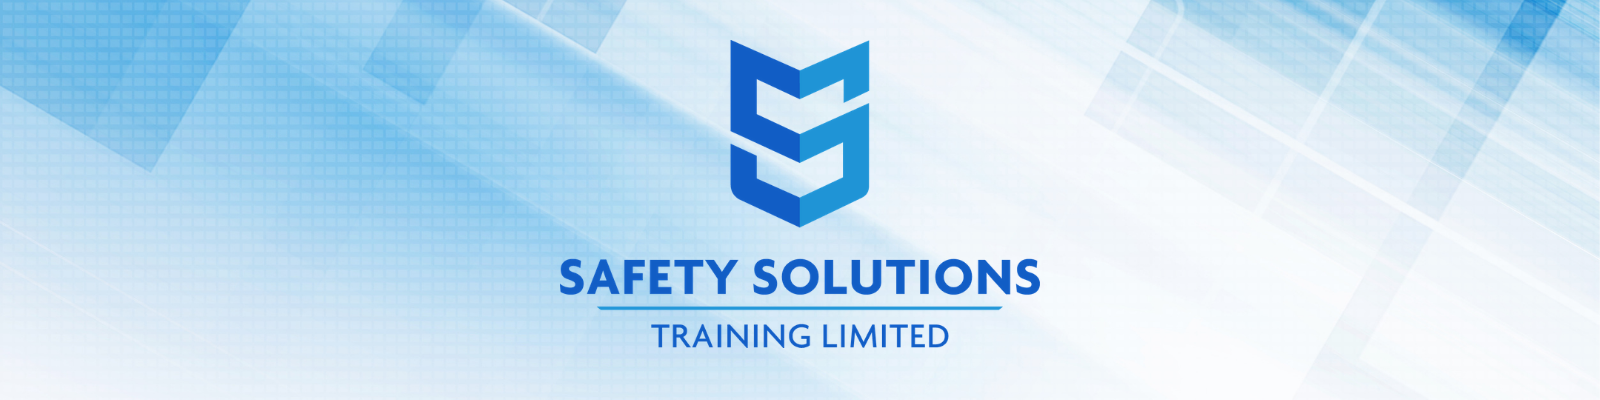 Safety Solutions Training Ltd.